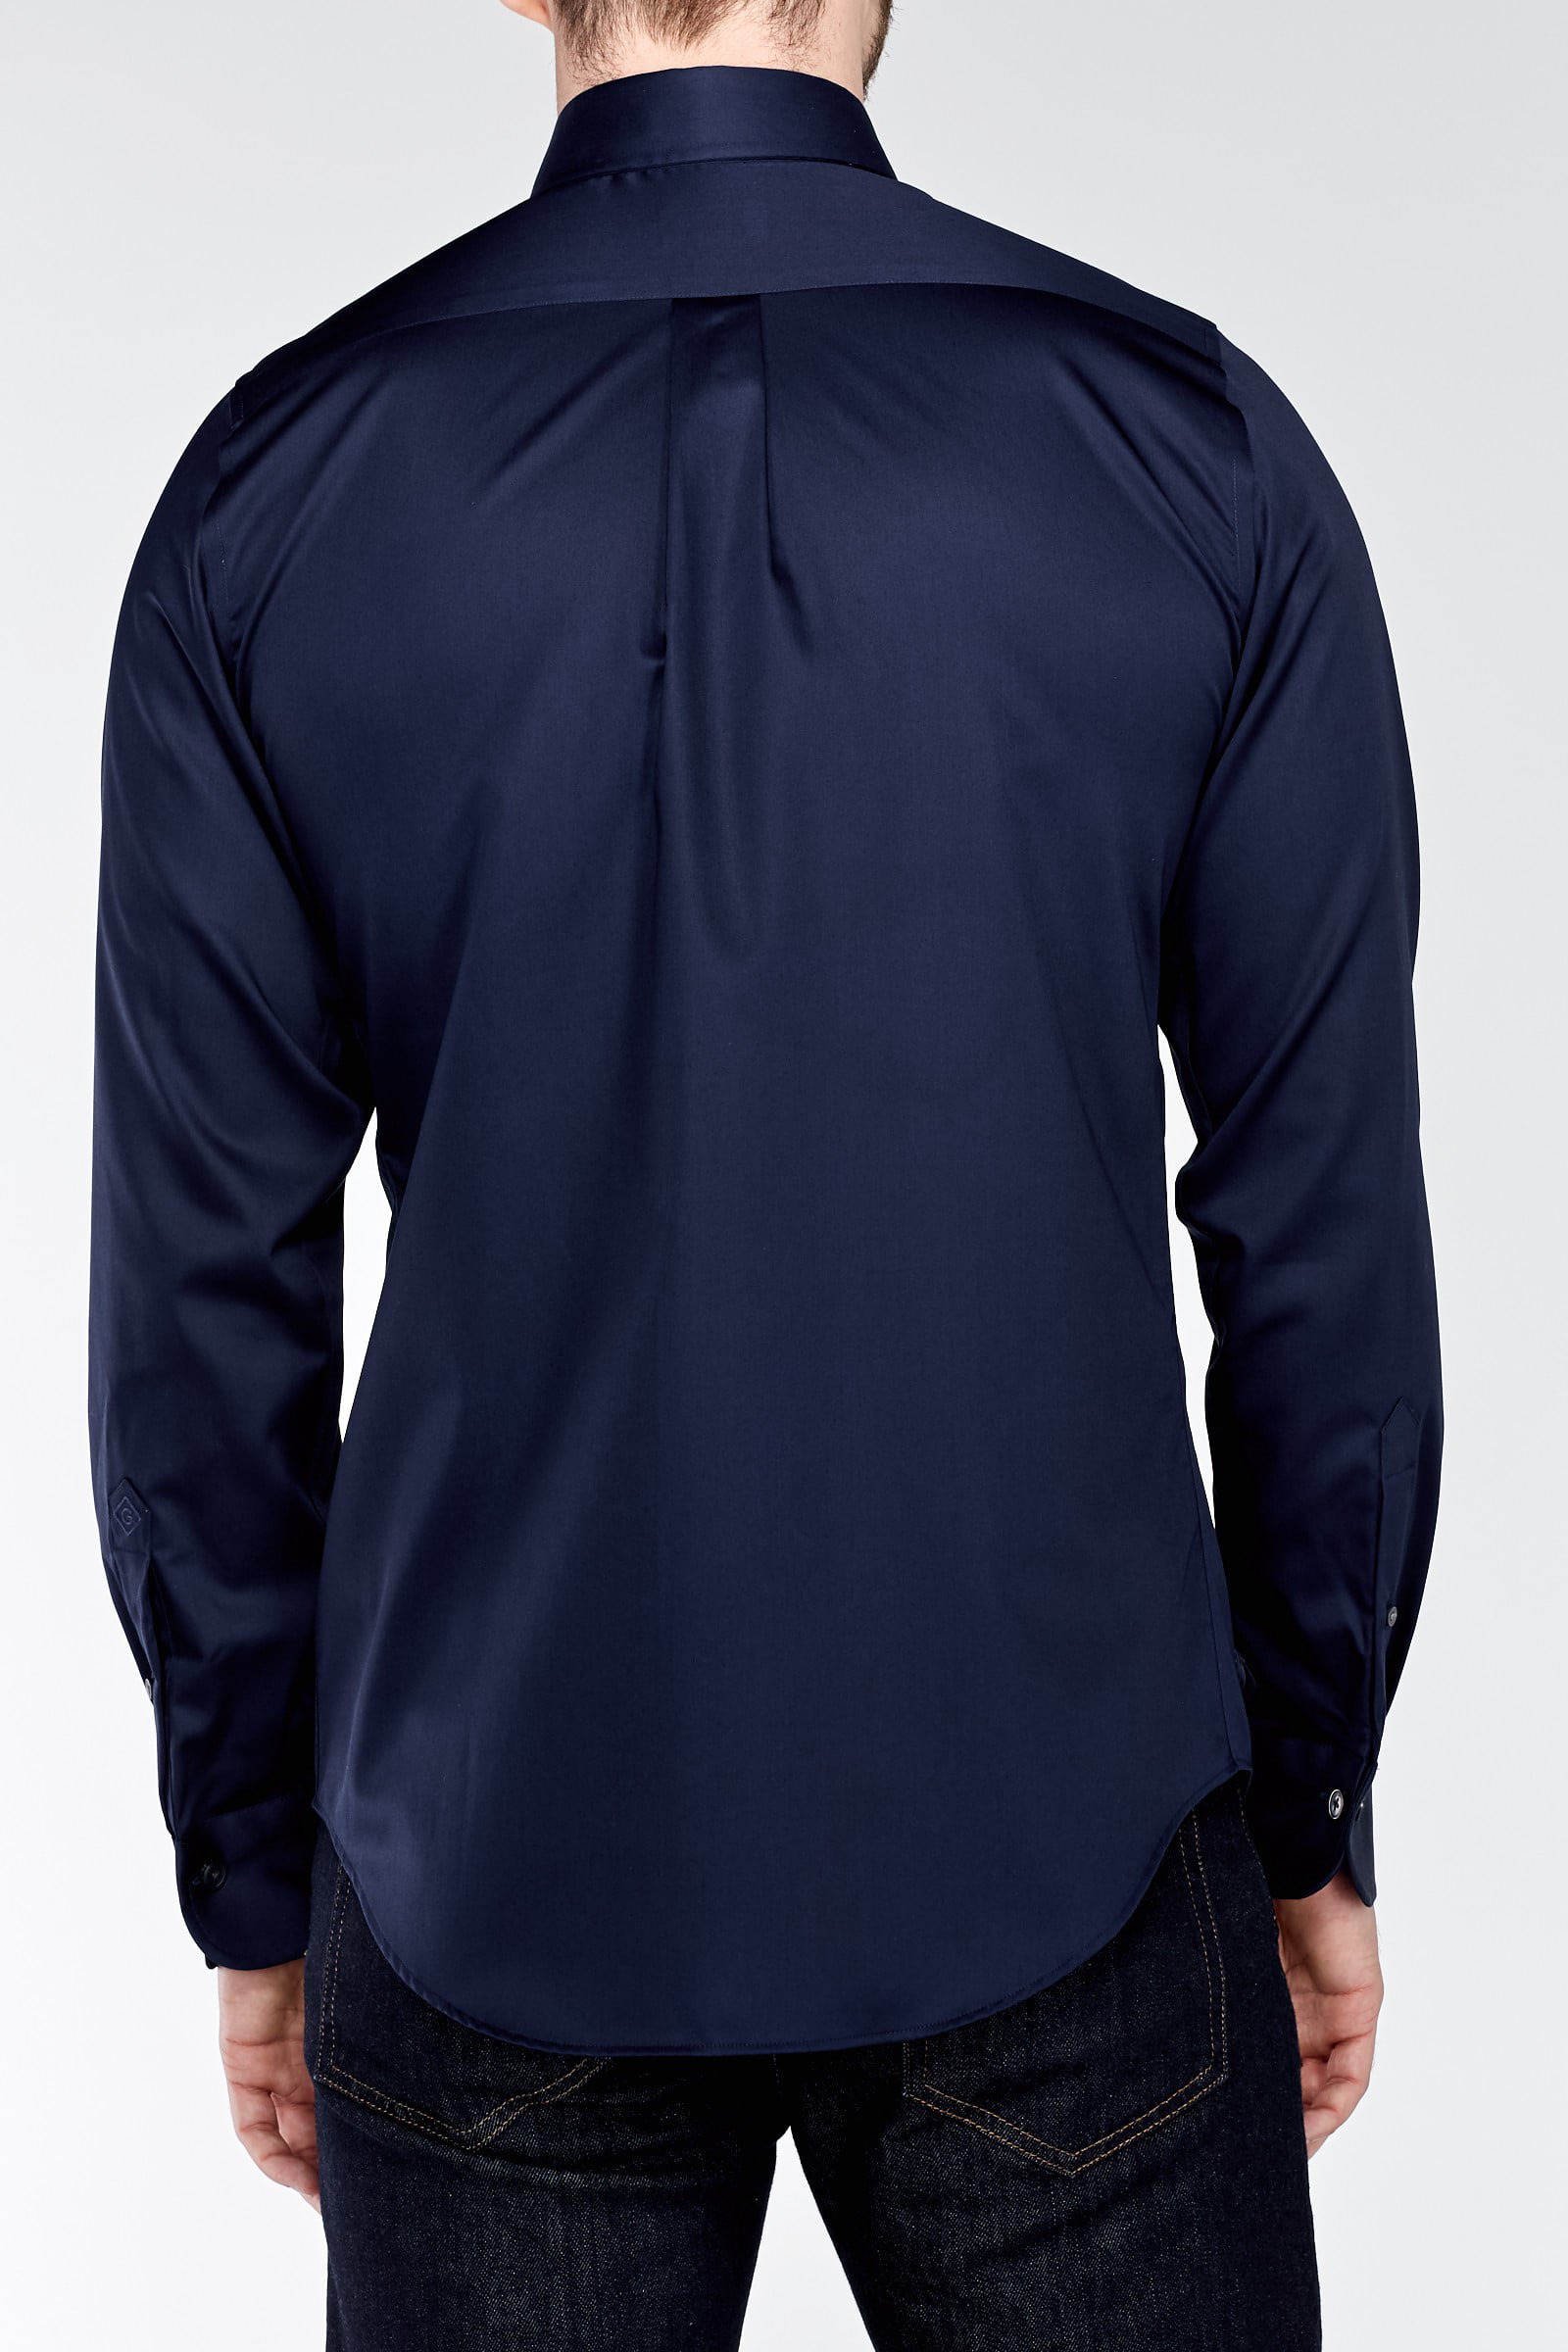 Gant Diamond G Men's Fitted Knitted Piqaue Texture Button Down Shirt  (3050212), Medium, Hamptons Blue 